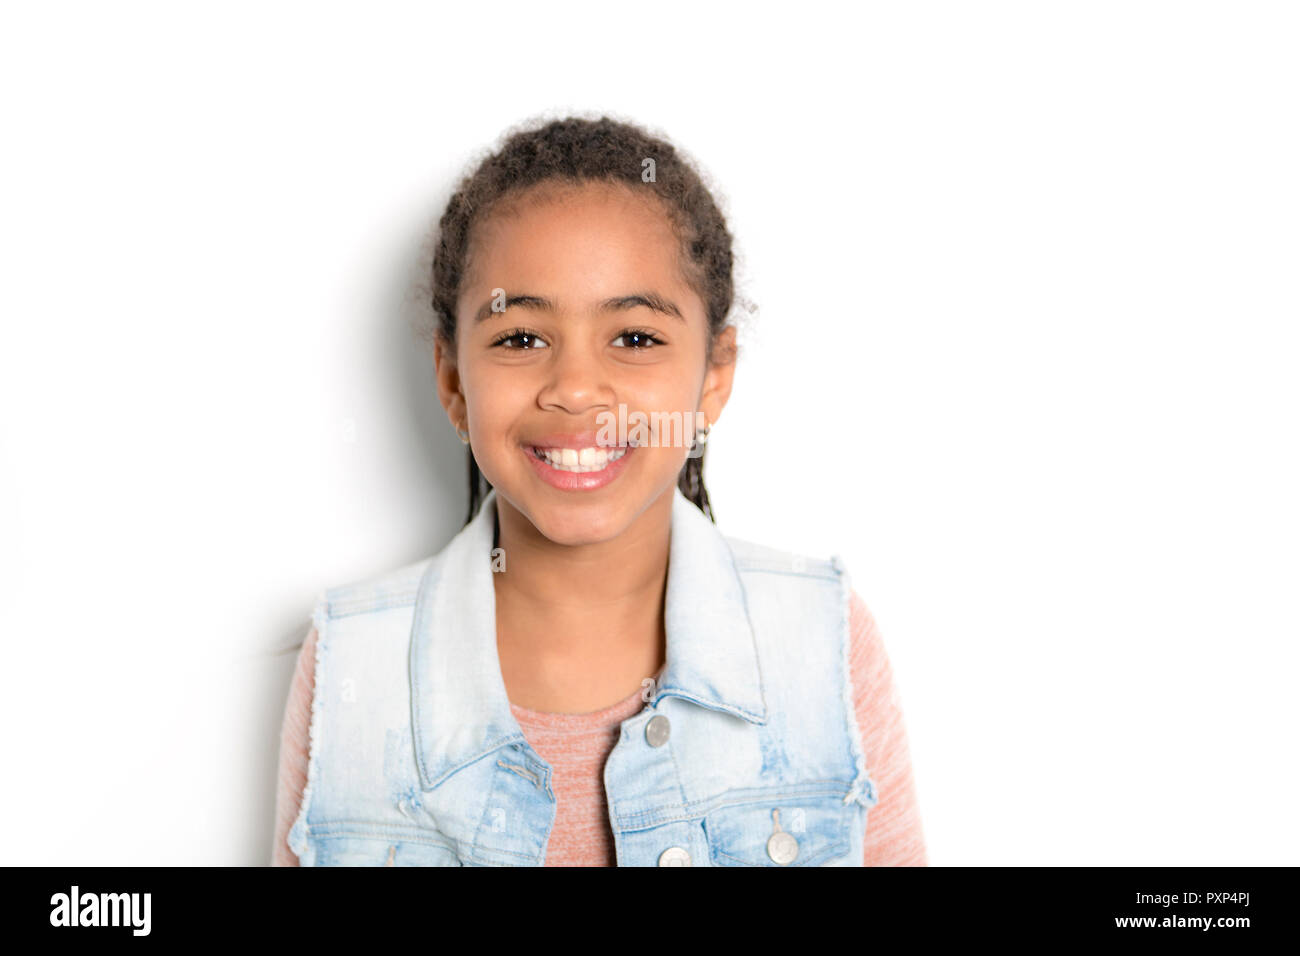 black Child girl portrait over gray background Stock Photo